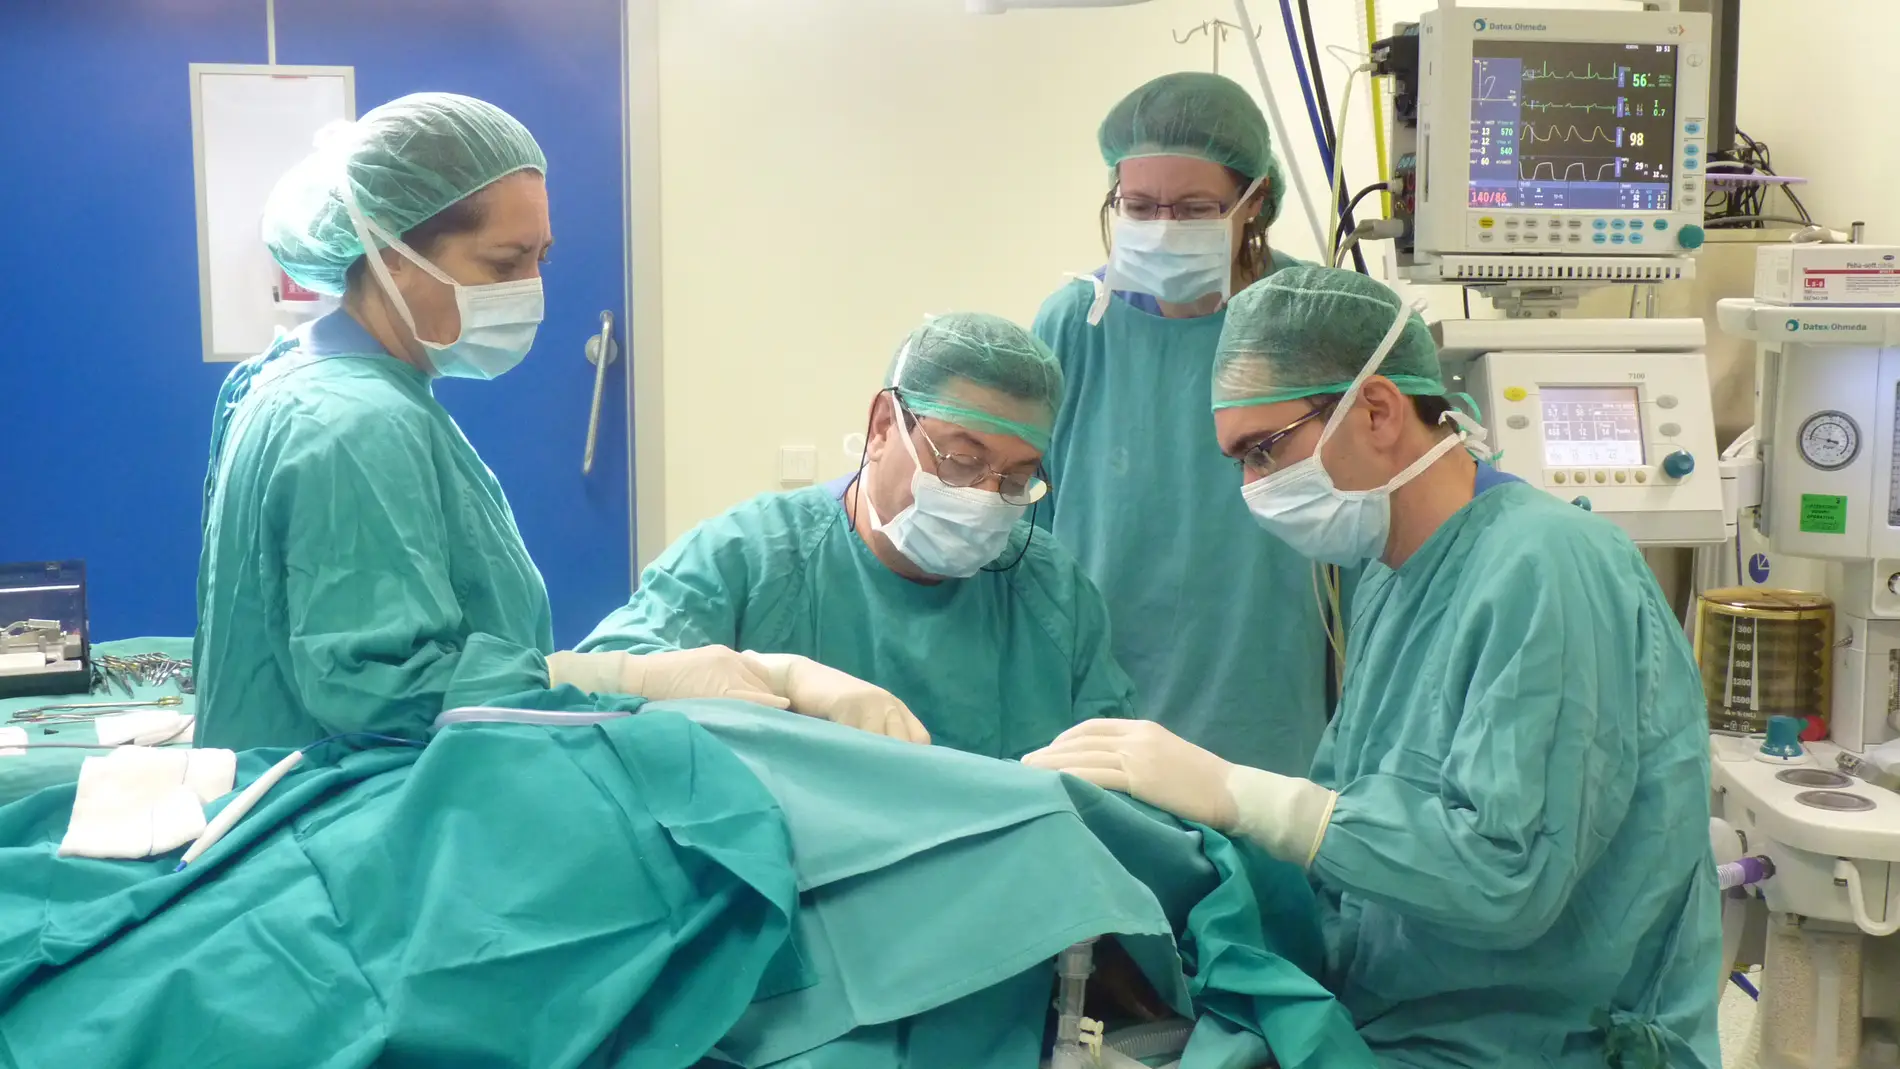 Operación quirúrgica en un hospital